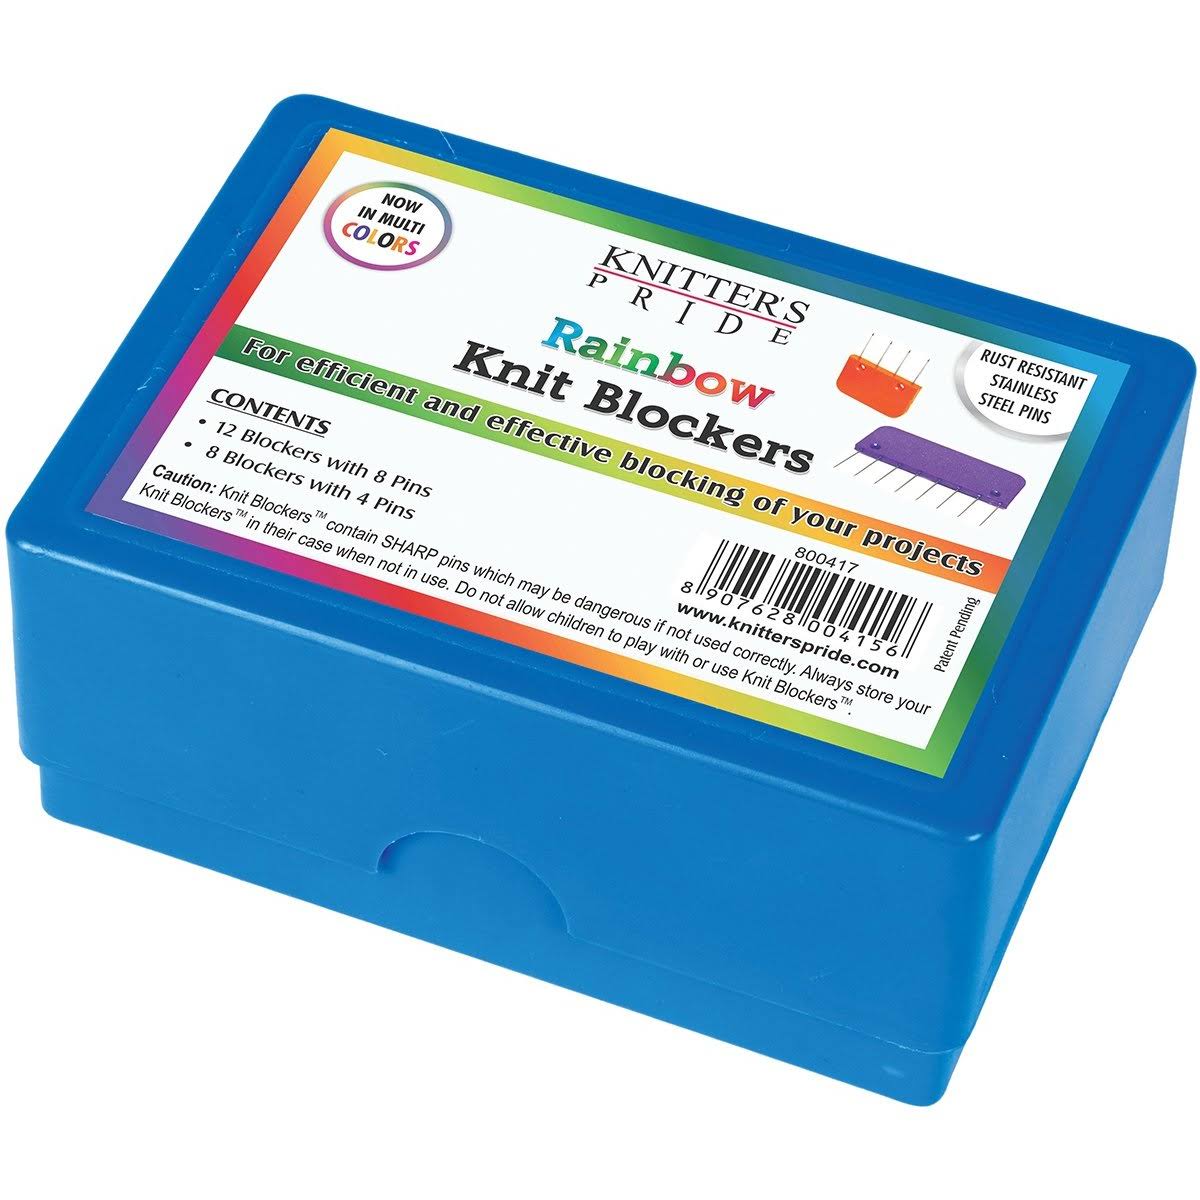 Knitter's Pride Rainbow Knit Blockers-Package of 20 - OnBuy.com